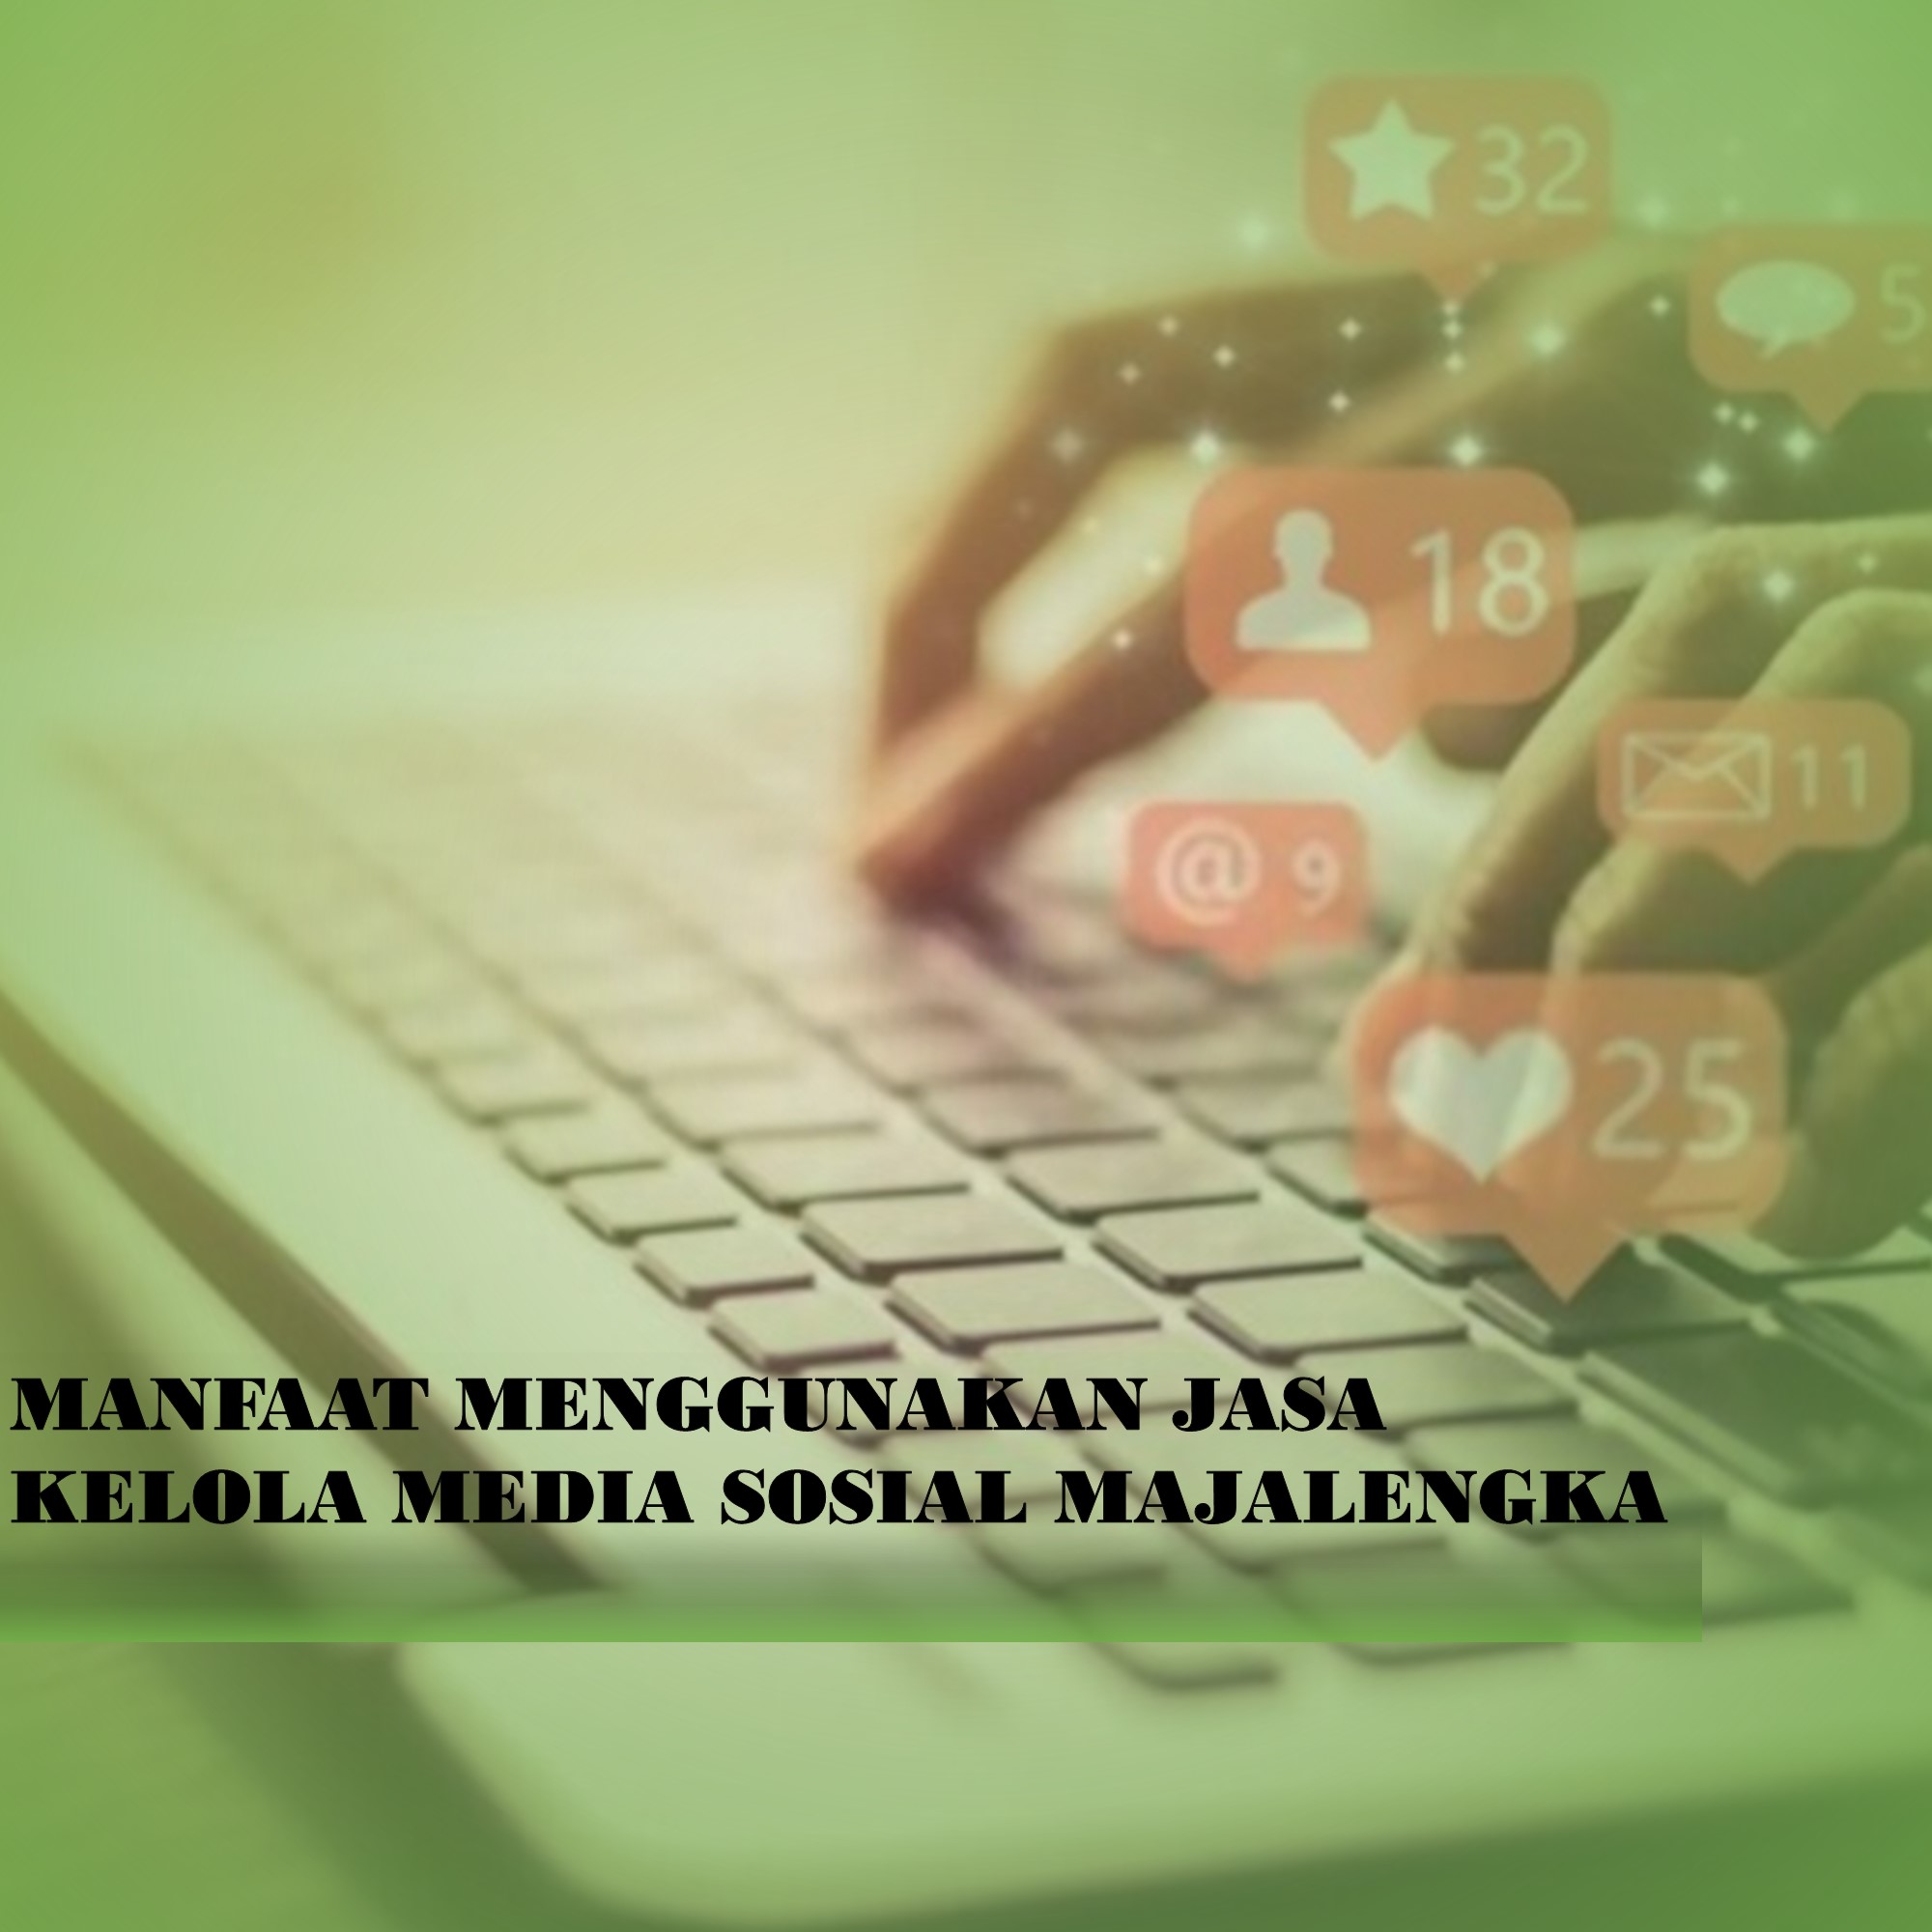 Kelola Media Sosial Majalengka